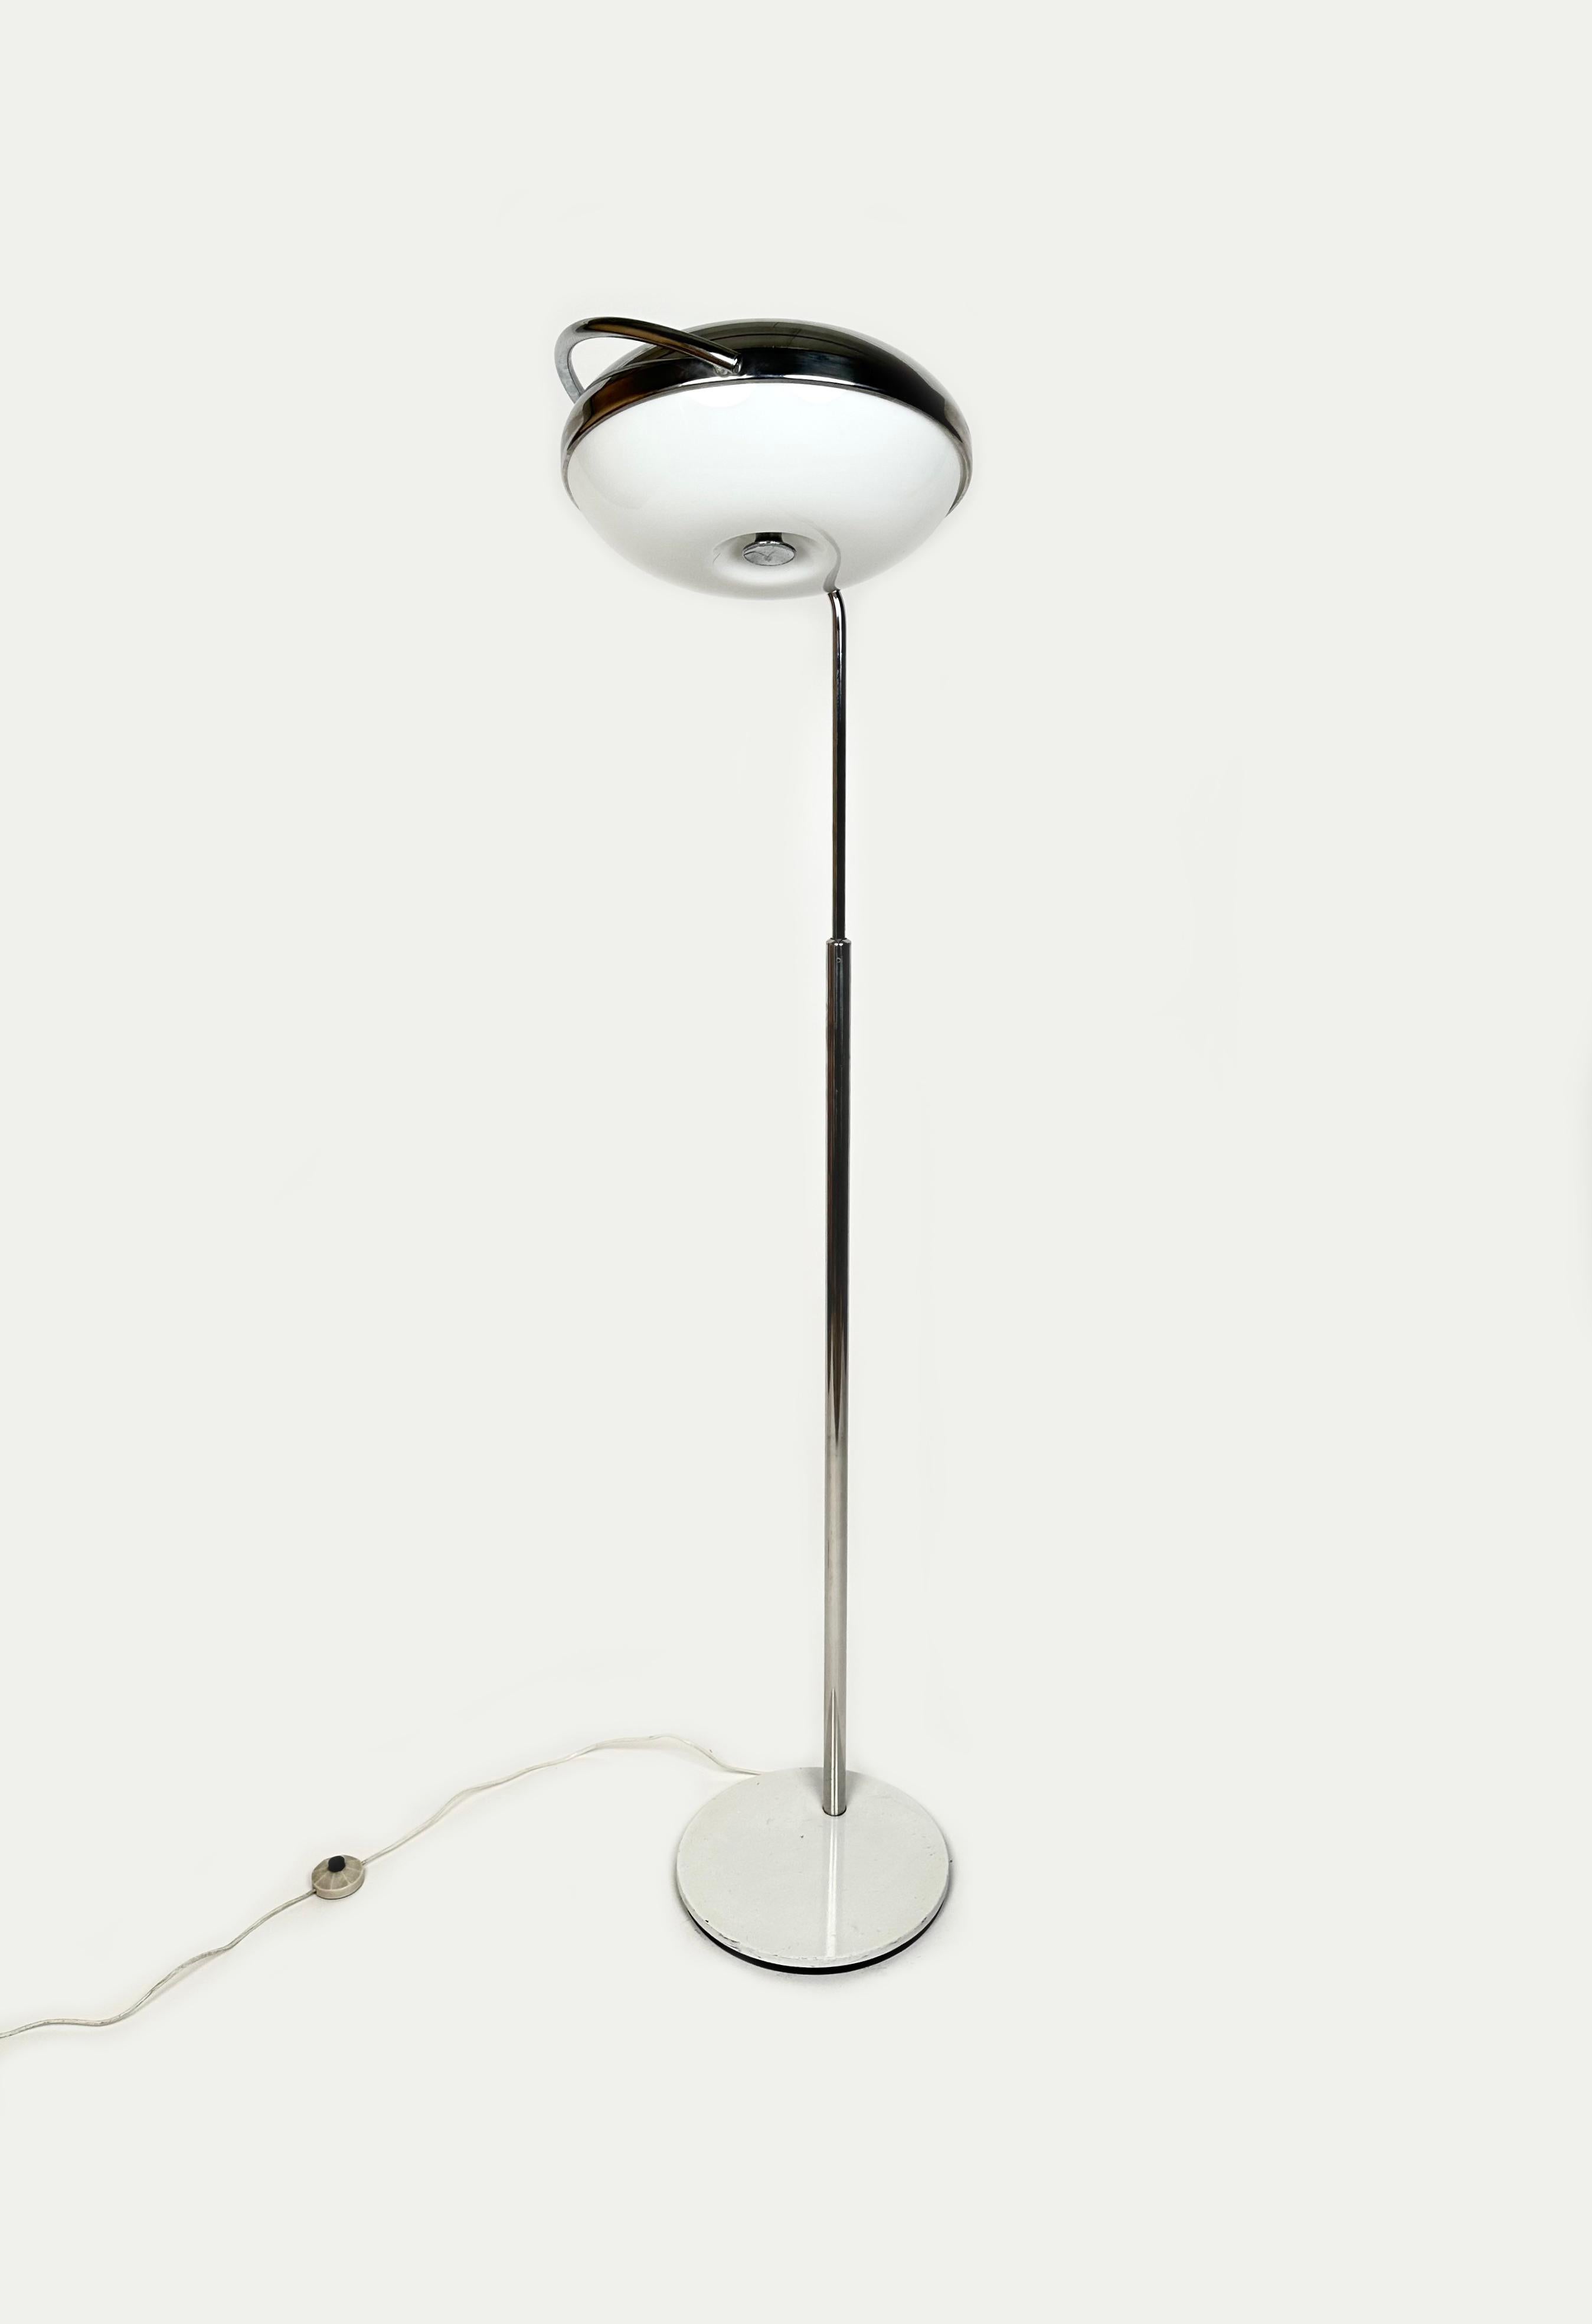 Midcentury Adjustable Floor Lamp in Chrome & Plexiglass by Reggiani, Italy 1970s For Sale 3